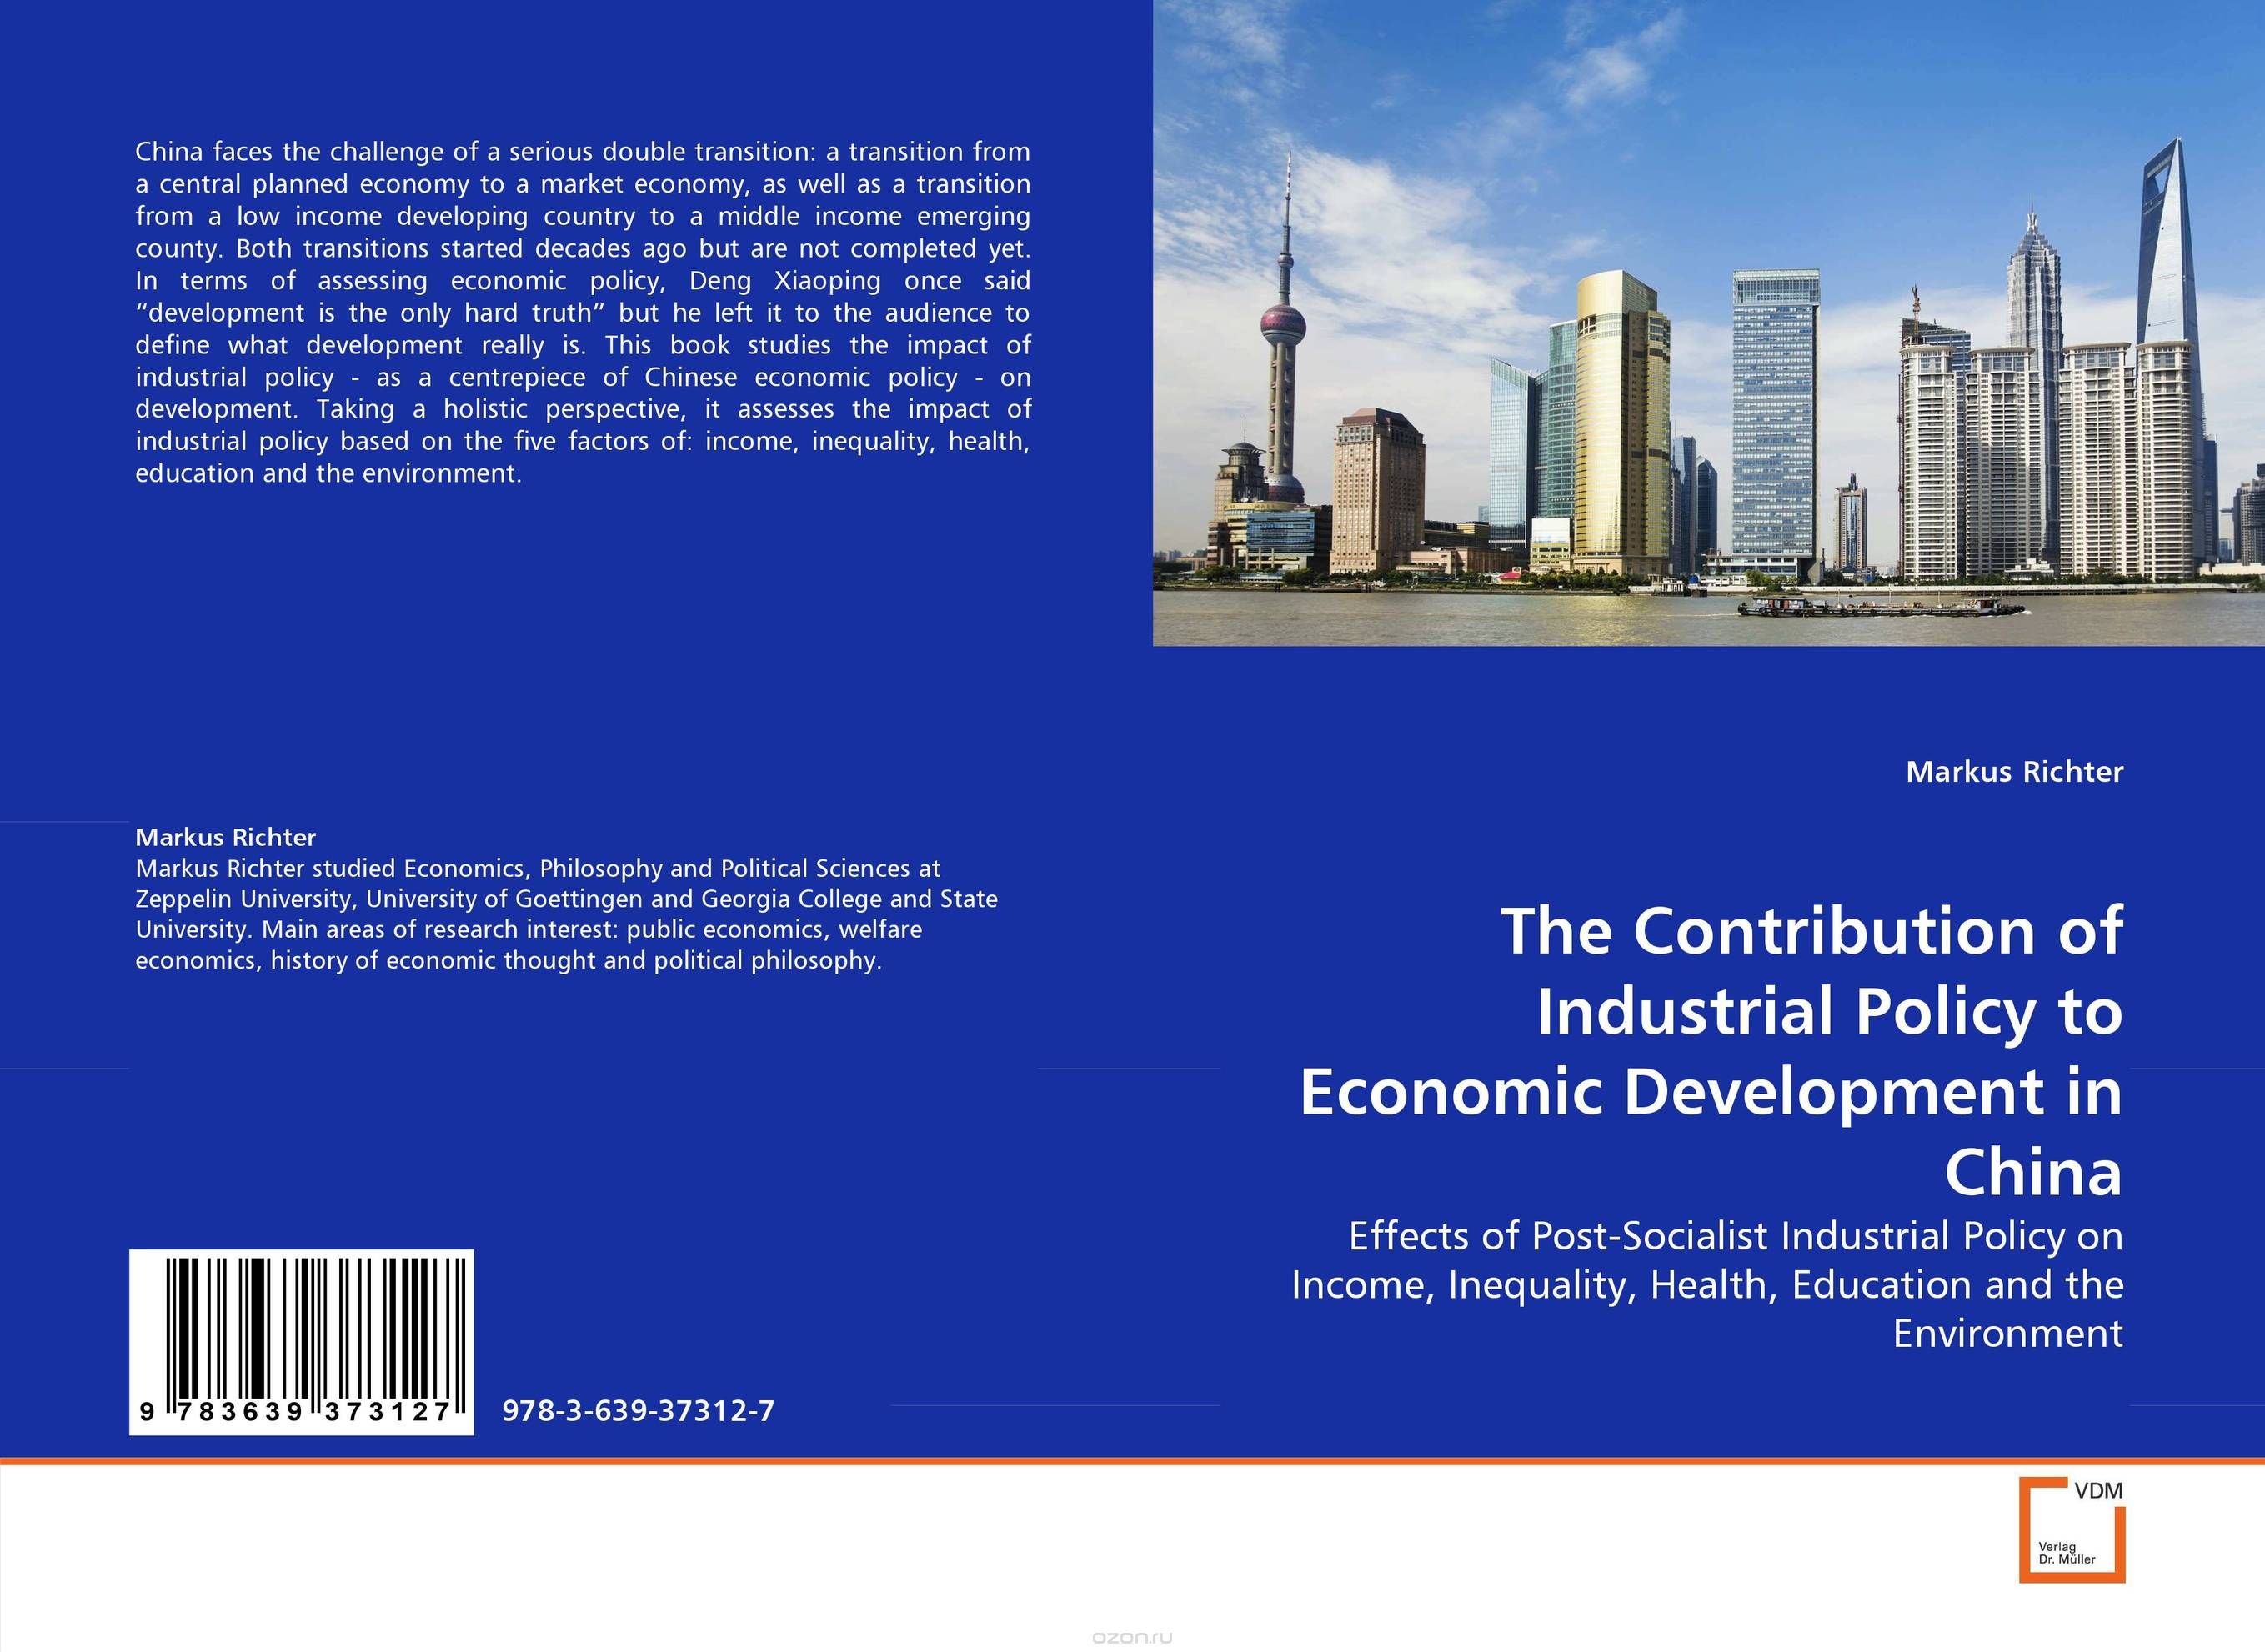 Скачать книгу "The Contribution of Industrial Policy to Economic Development in China"